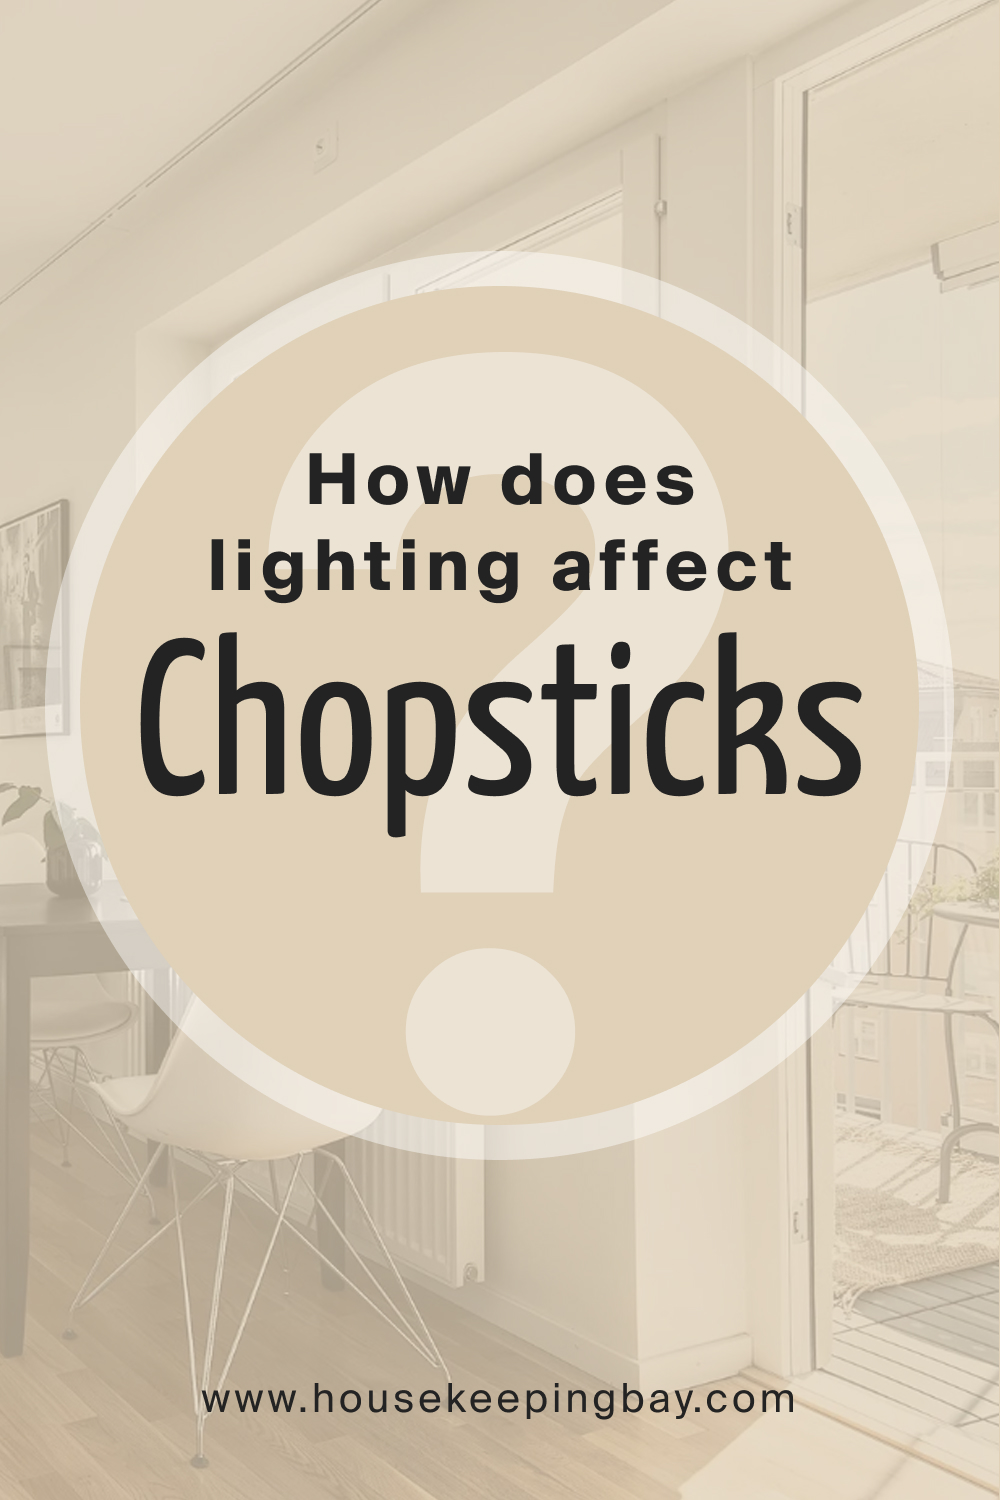 How does lighting affect SW Chopsticks